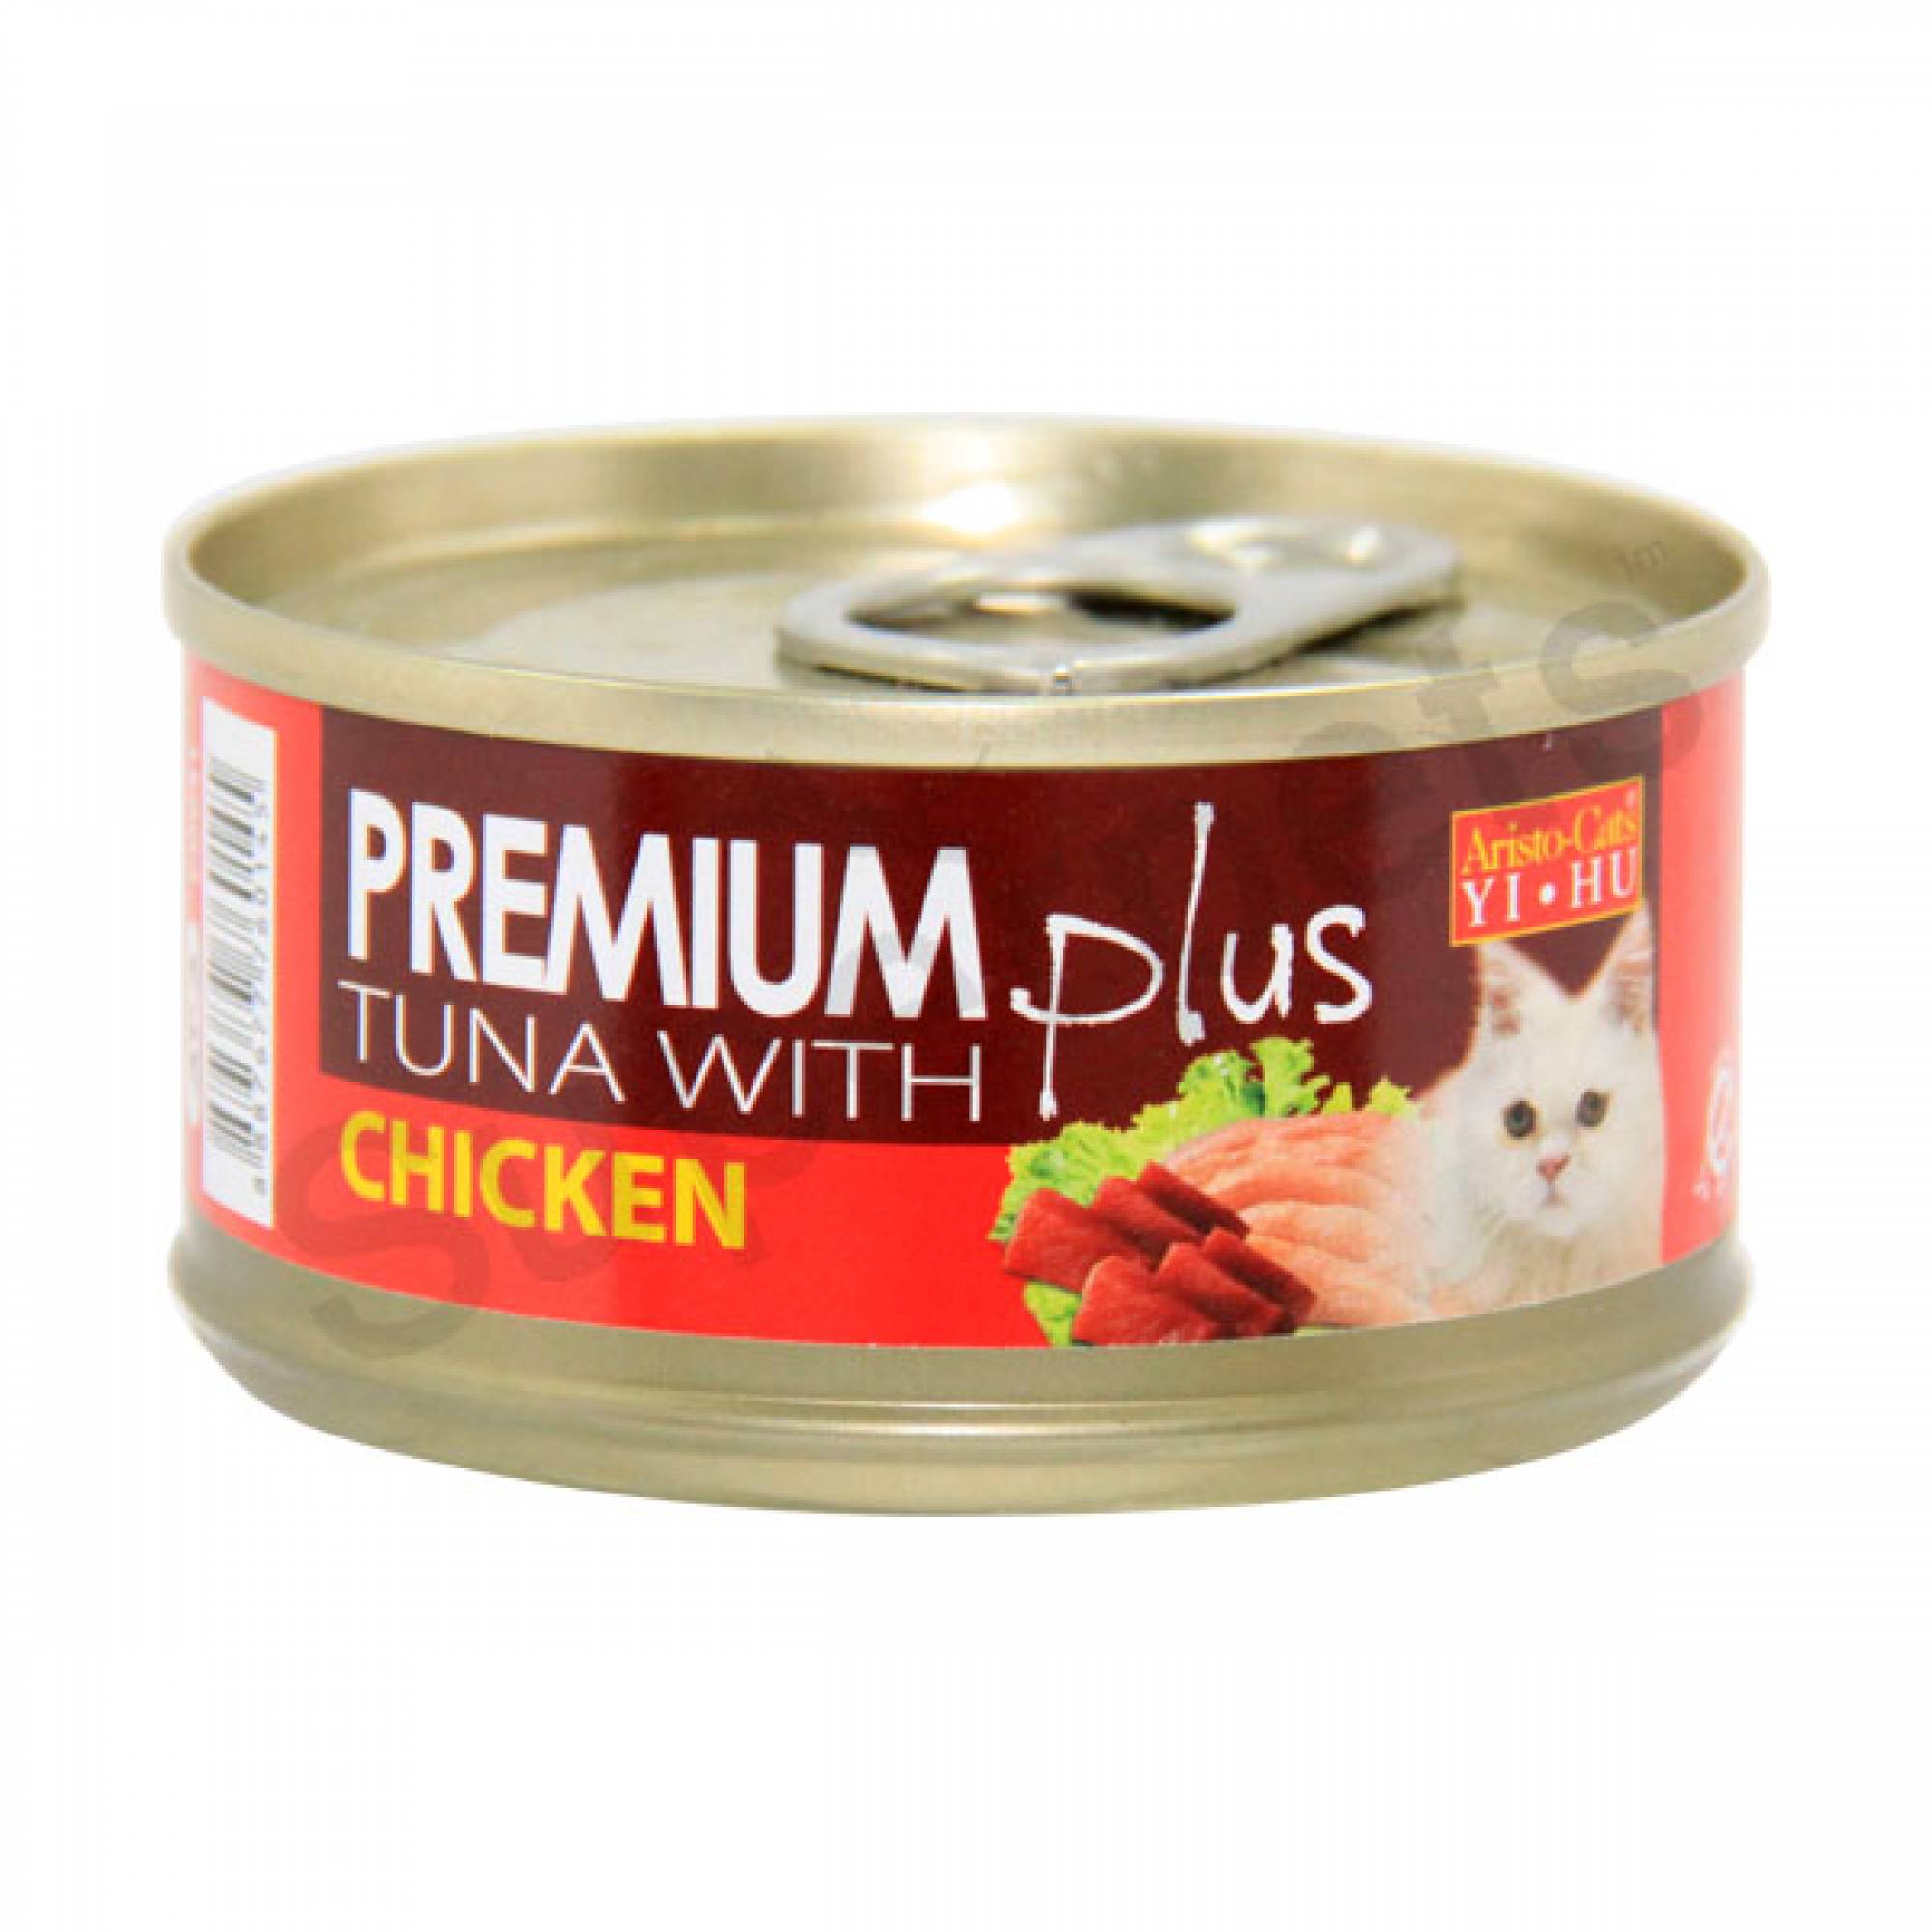 Aristo-Cats - Premium Plus - Tuna with Chicken 80g x 24pcs (1 carton)